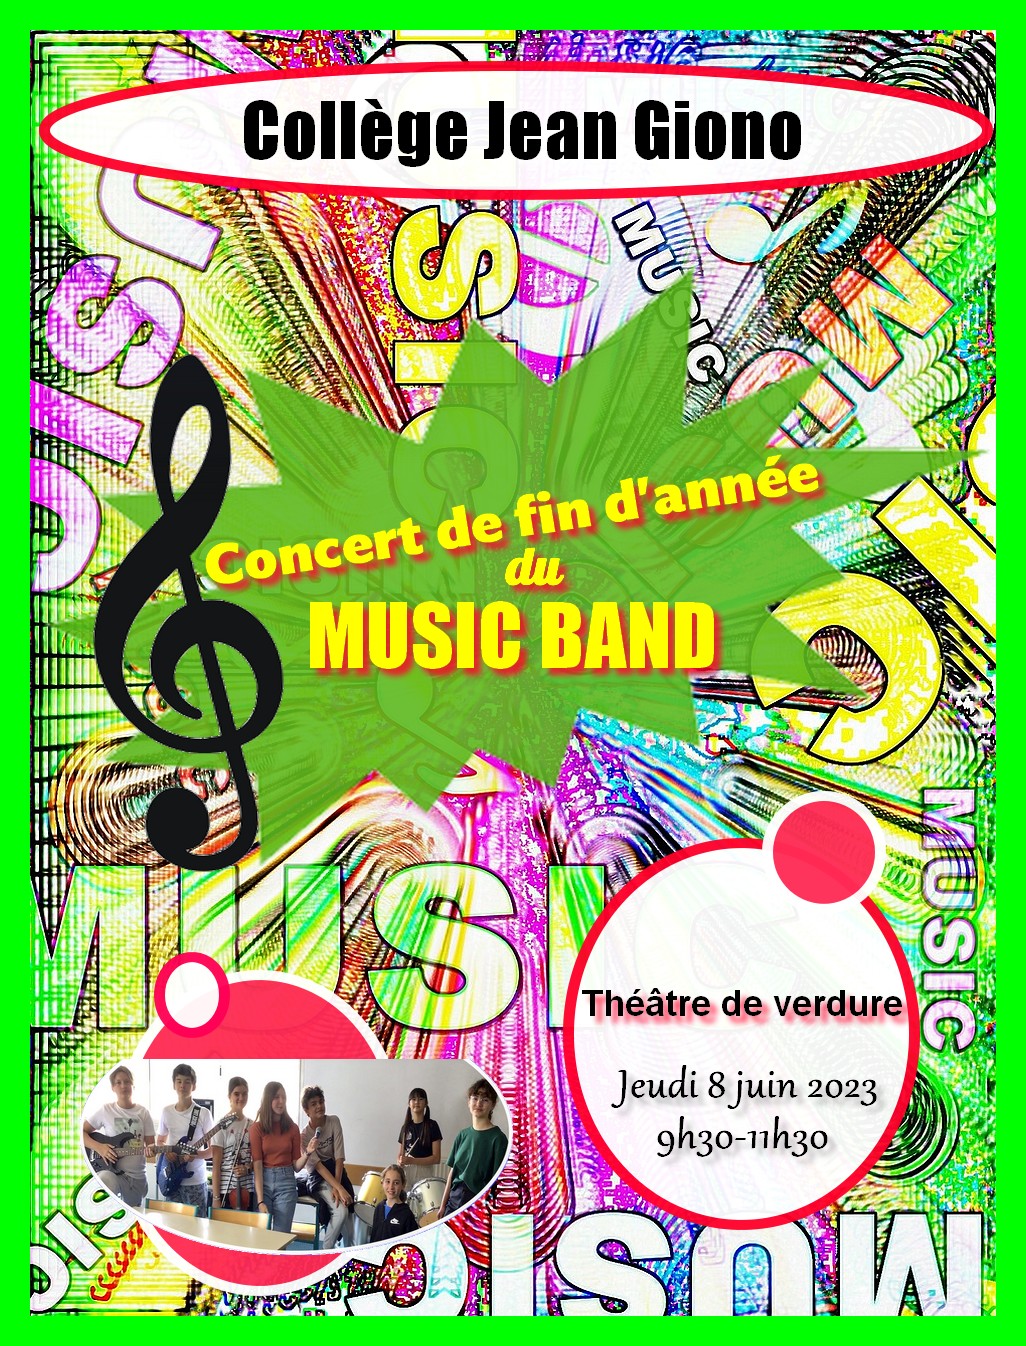 Concert music band